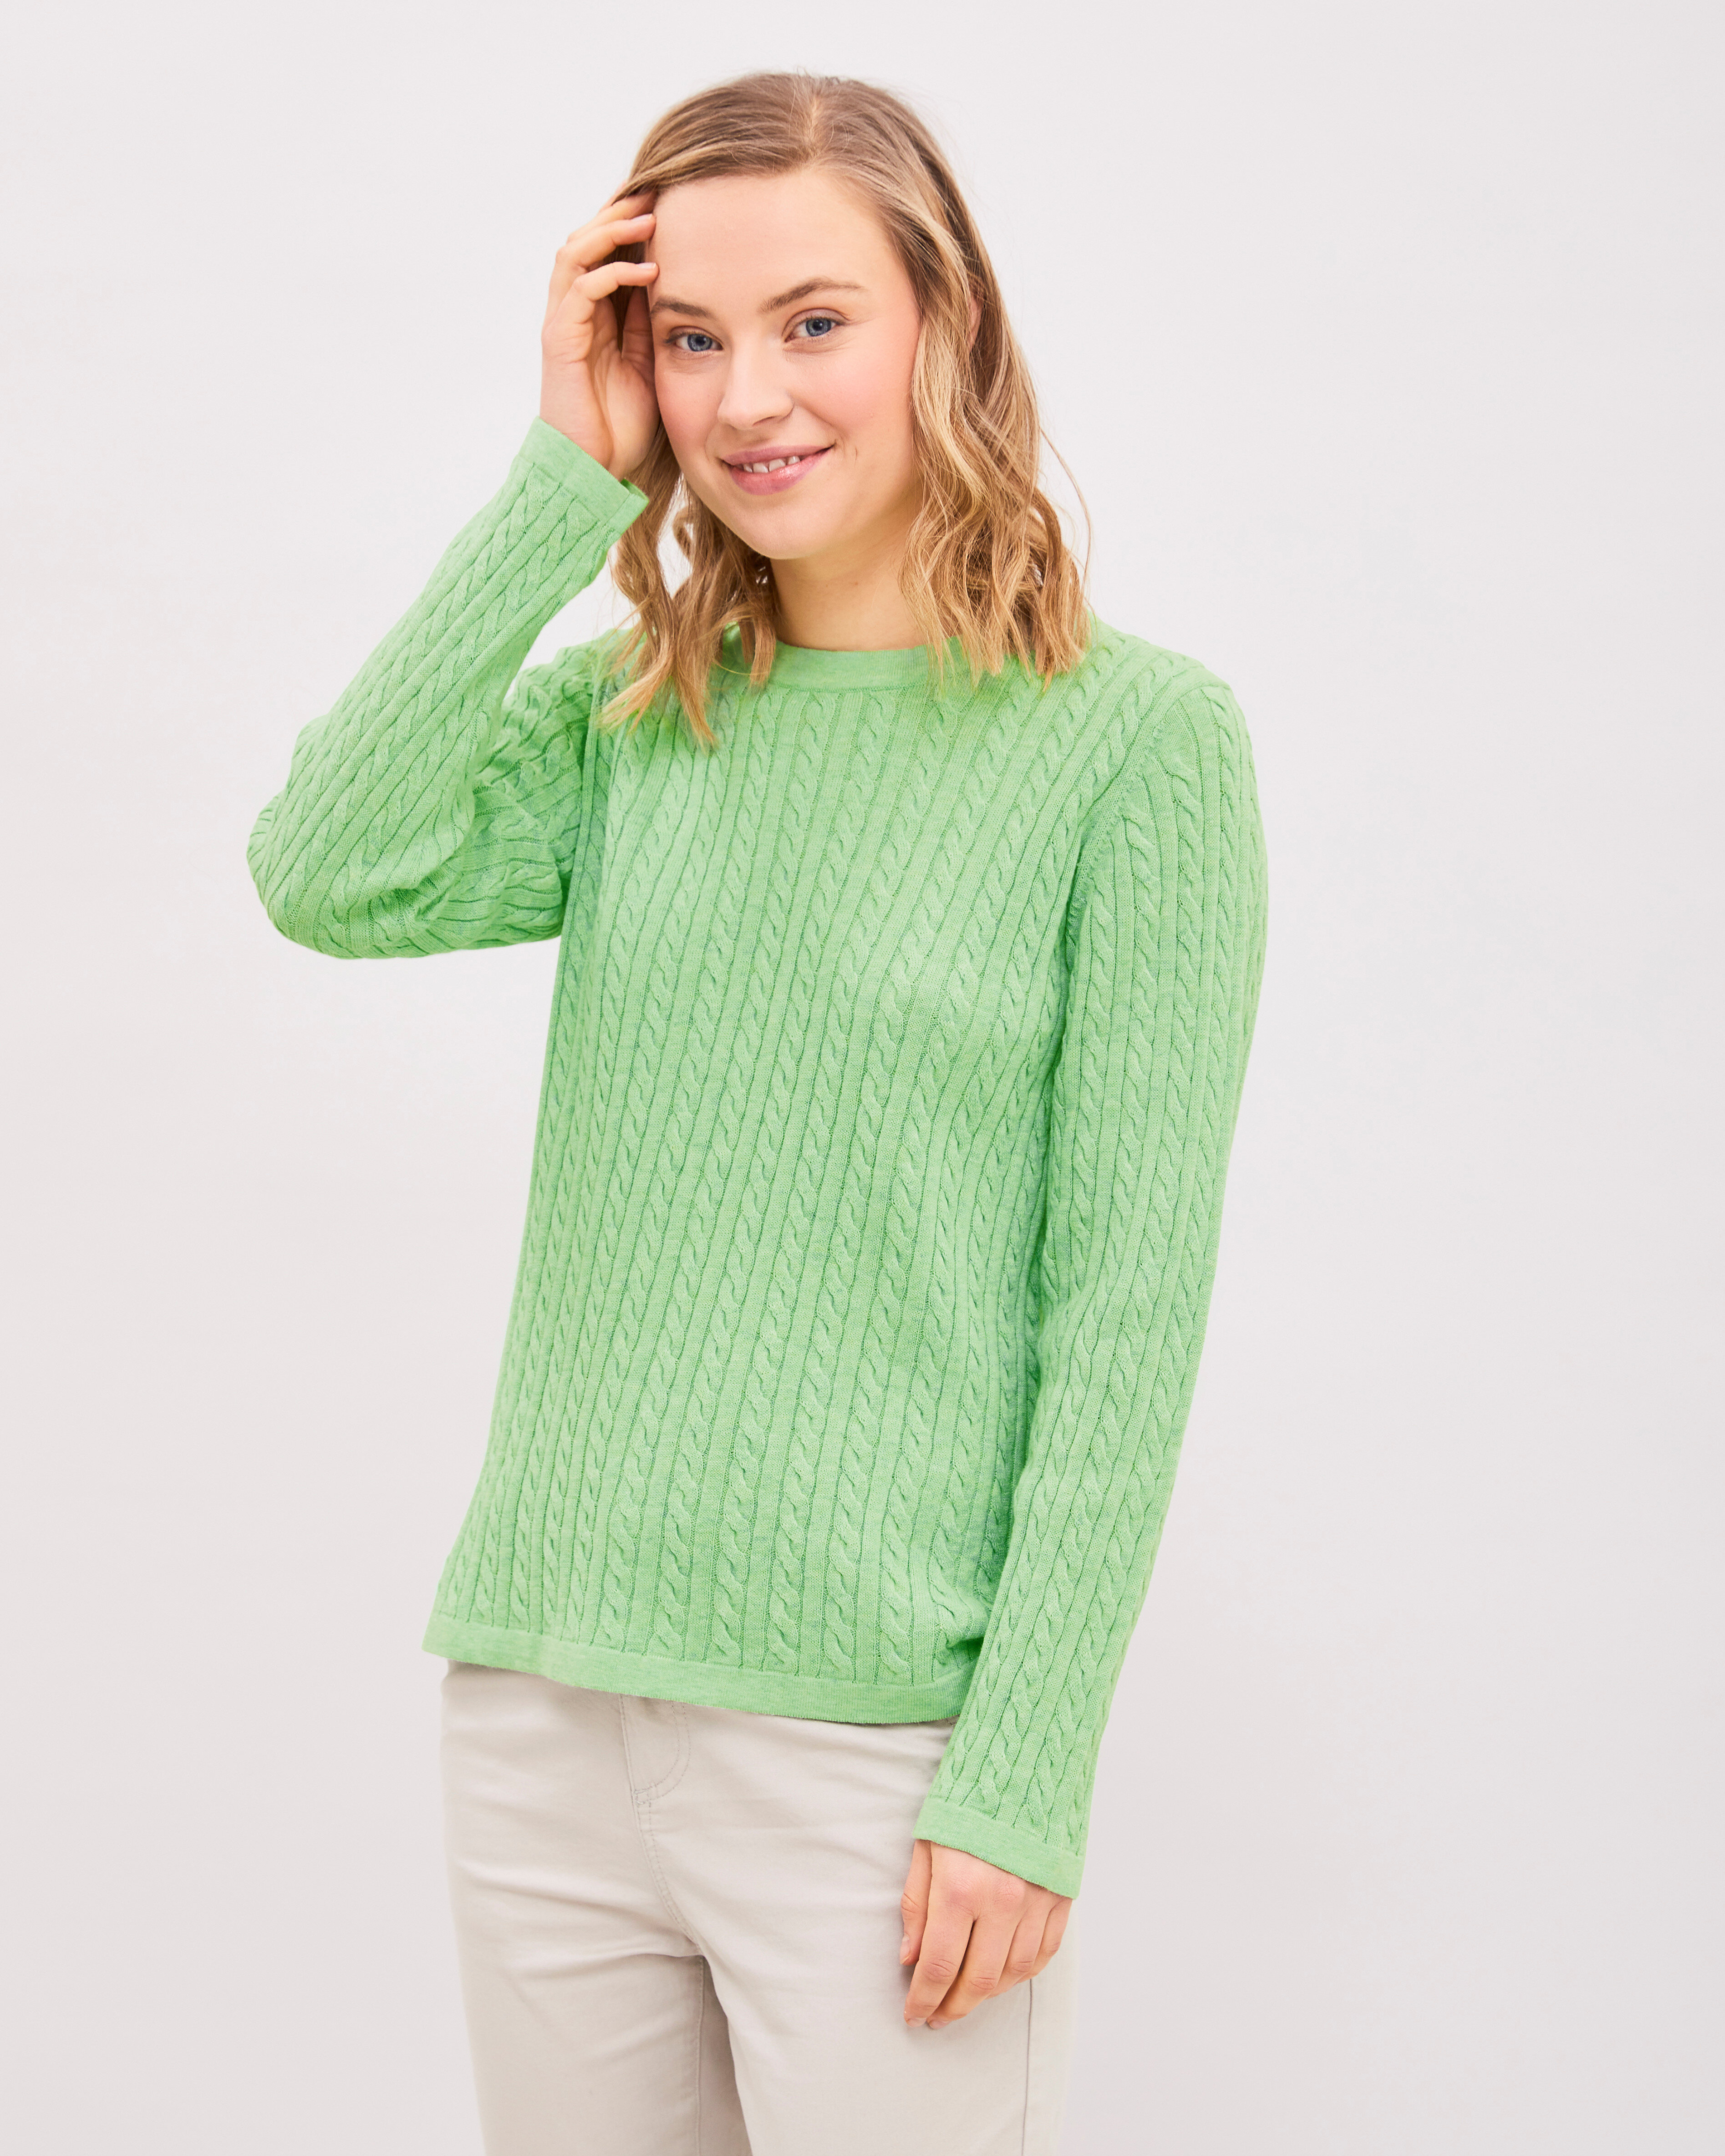 Cate Cabel Sweater